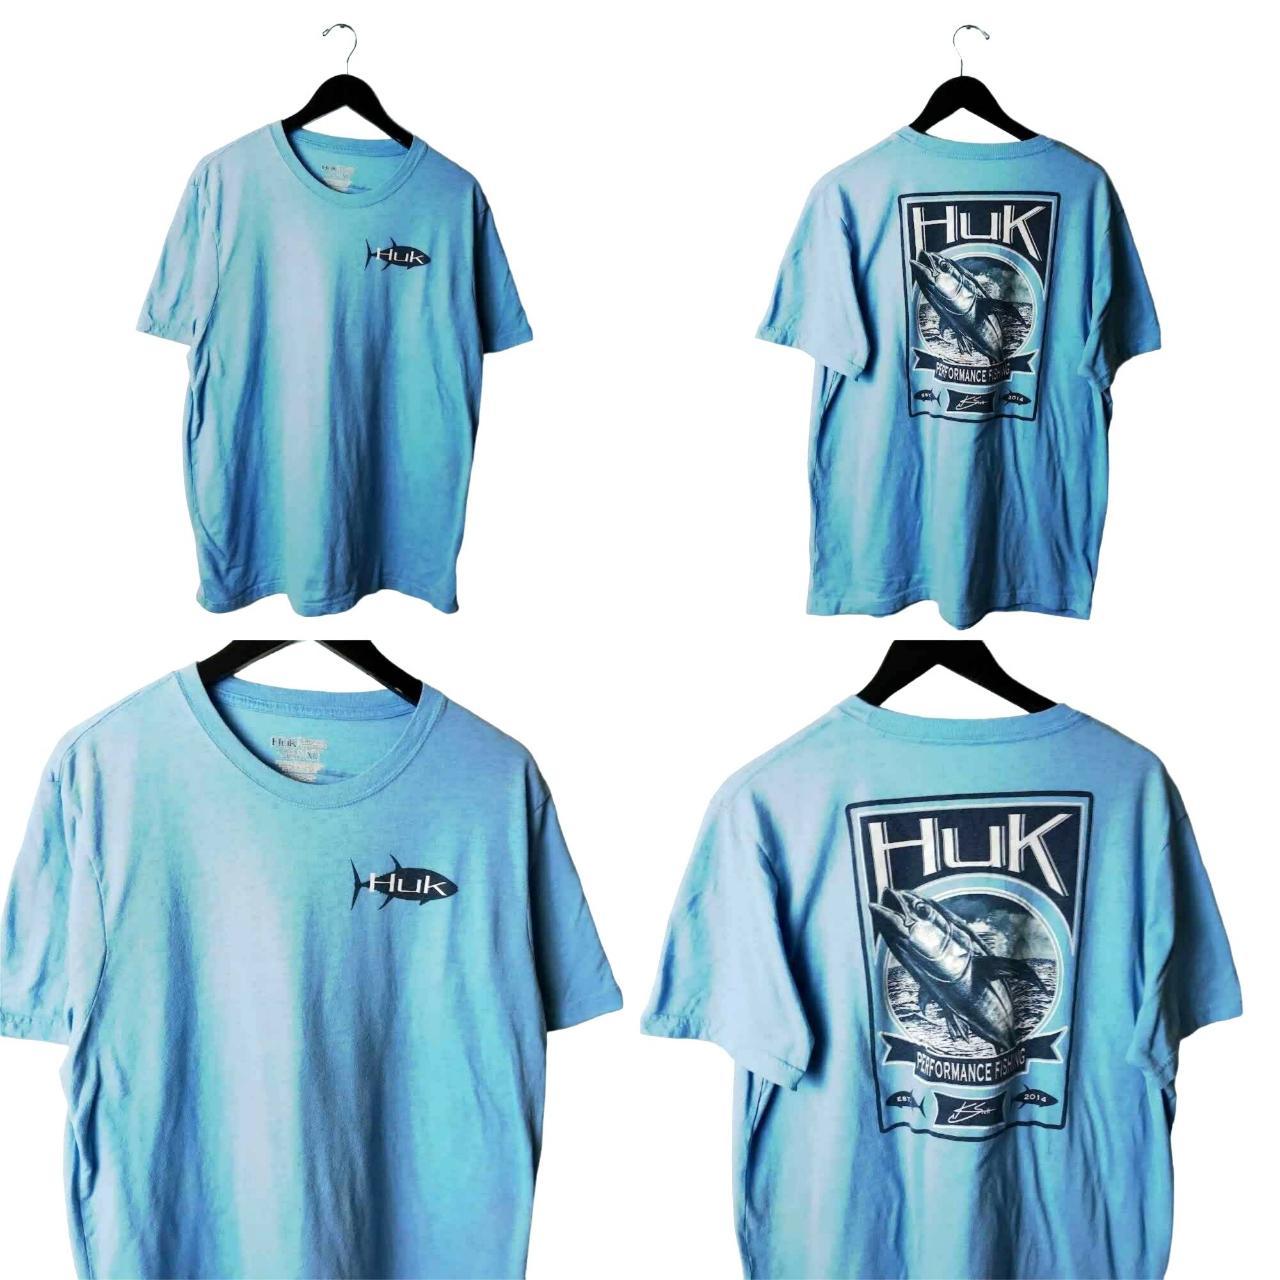 Huk Performance Fishing Crew-Neck Short-Sleeve T-Shirt for Ladies